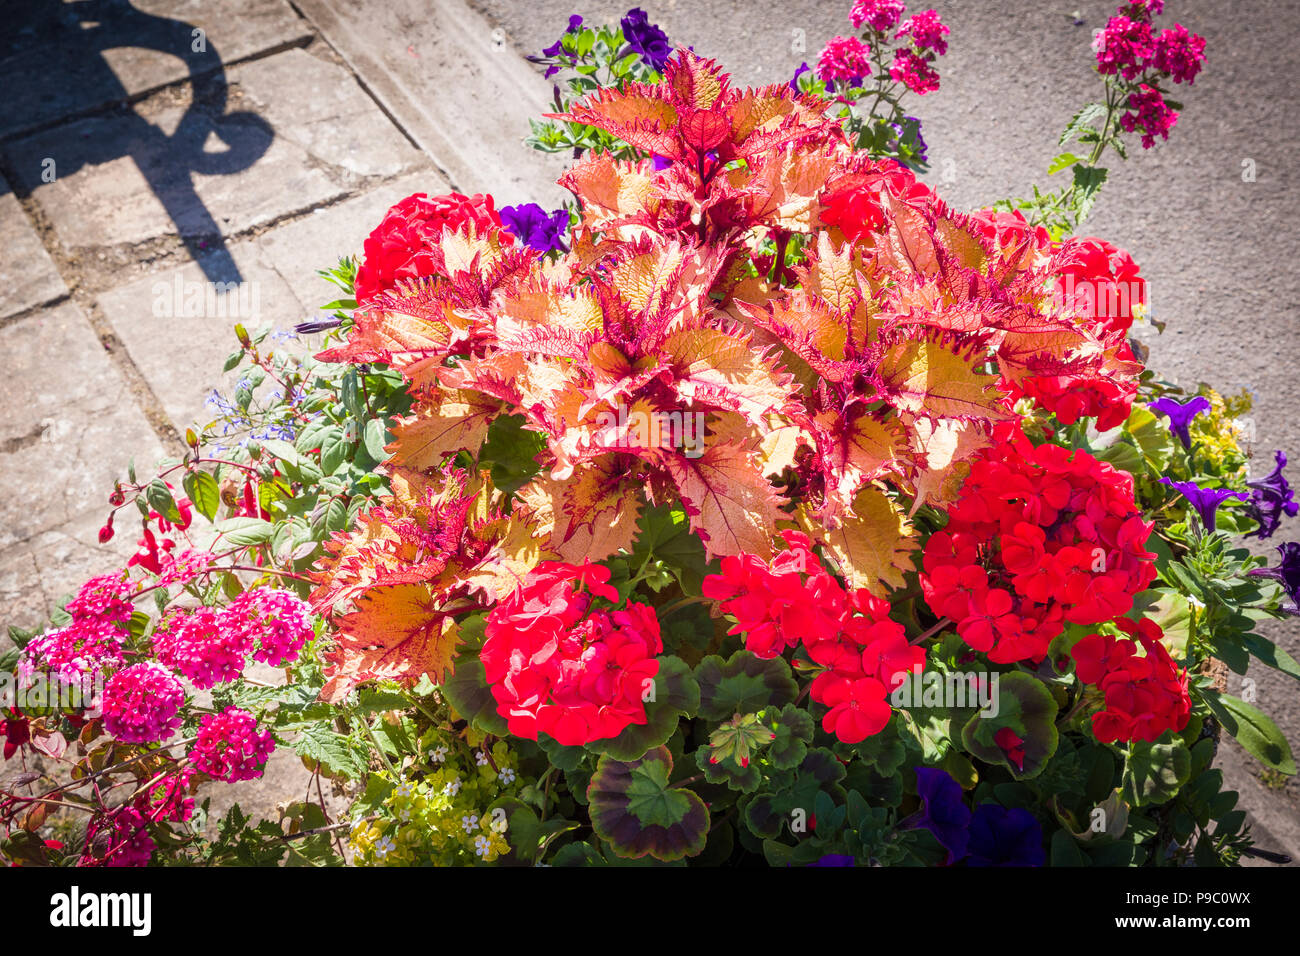 Urban floral display in Devizes Wiltgshire England UK in July including petunias verbena coleus and pelargoniums Stock Photo